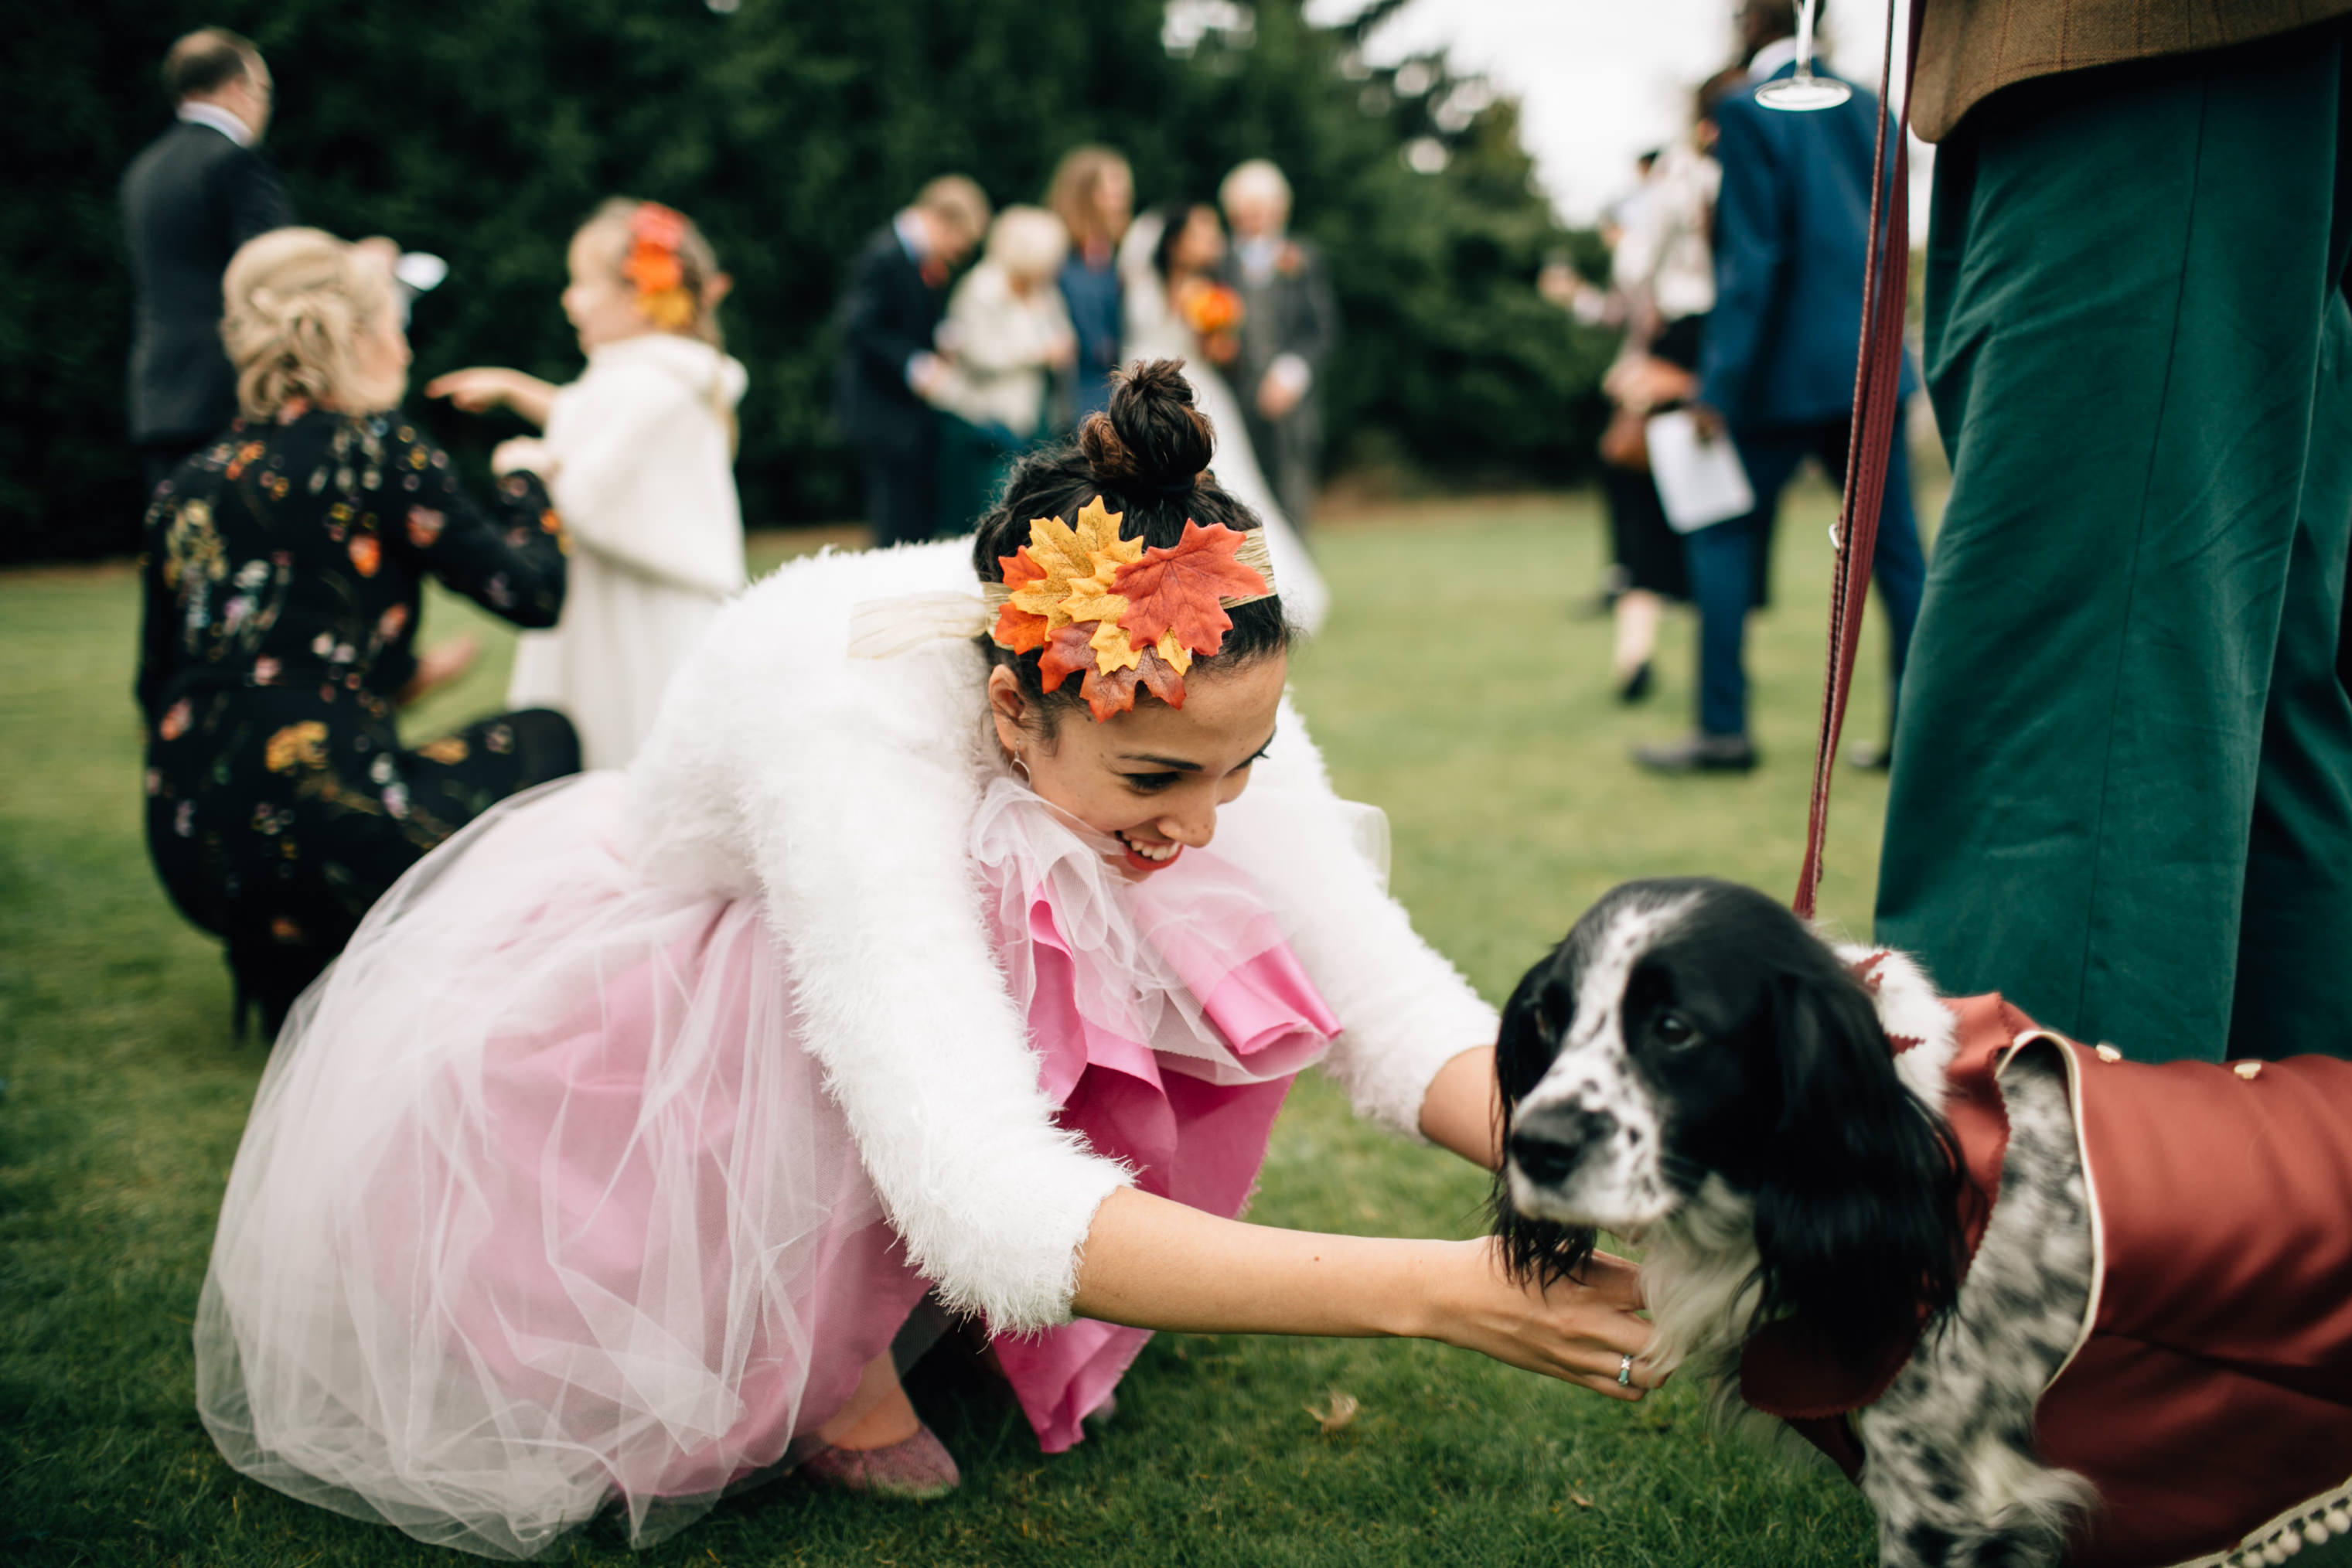 fun wedding photographs autumn wedding london with dogs